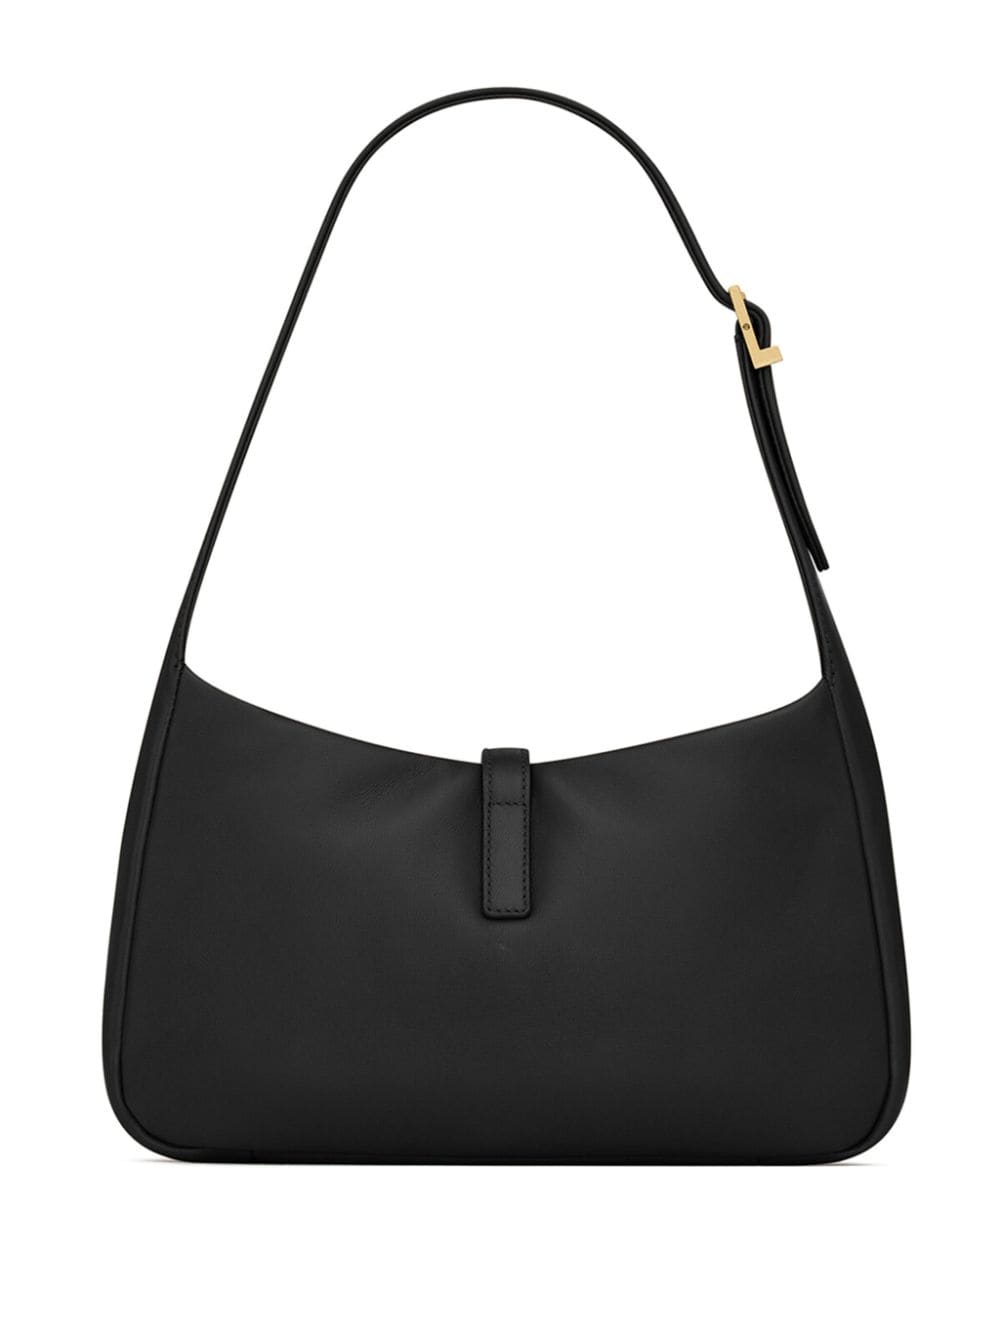 Cléo inspired Black Lambskin Handbag from SAINT LAURENT